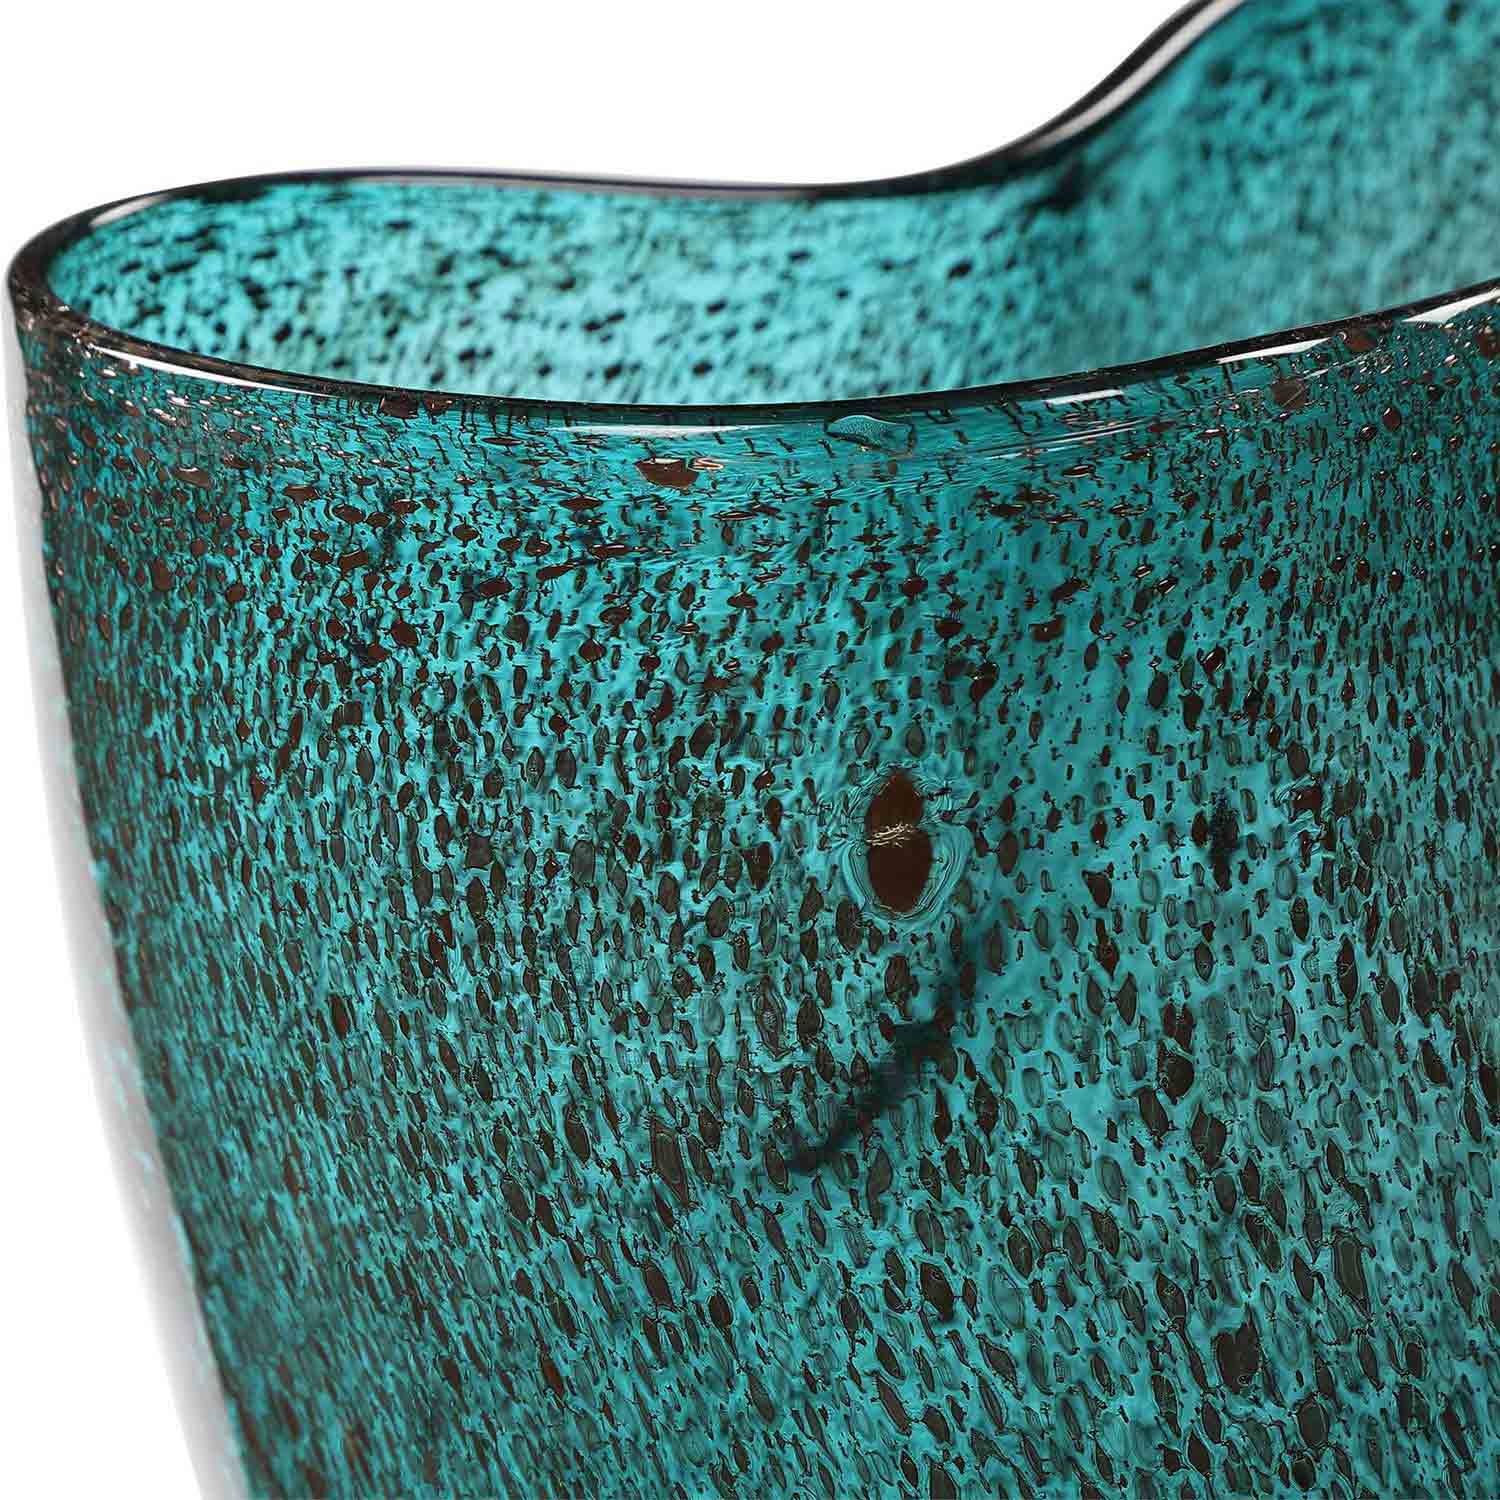 Uttermost Lulu Aqua Glass Vases - Set of 2